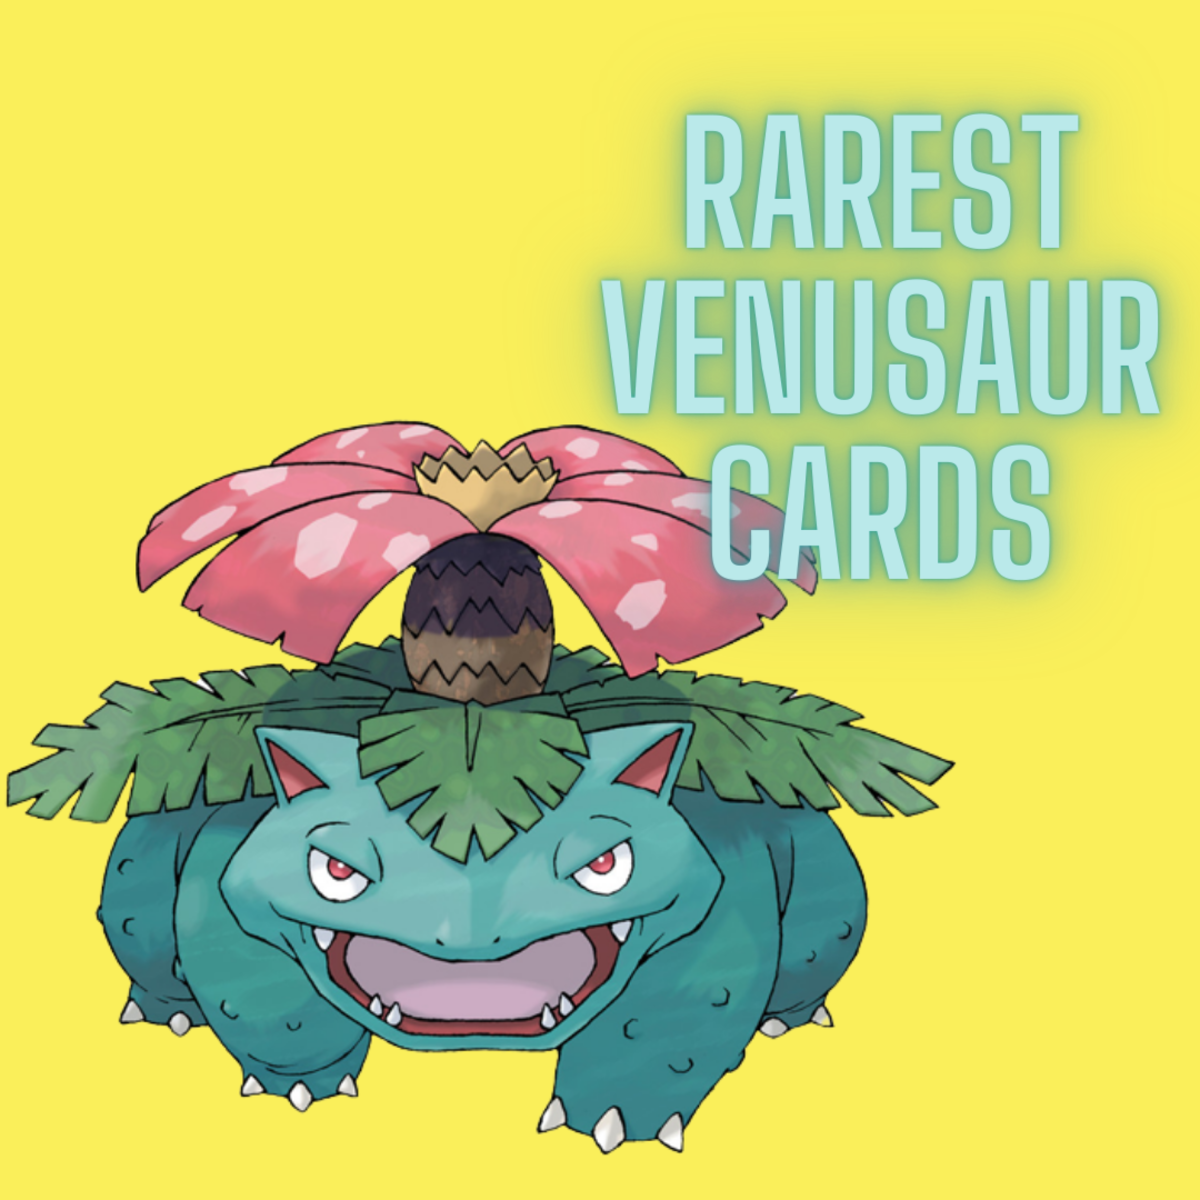 Pokémon TCG: 5 of the Rarest and Most Valuable Venusaur Cards